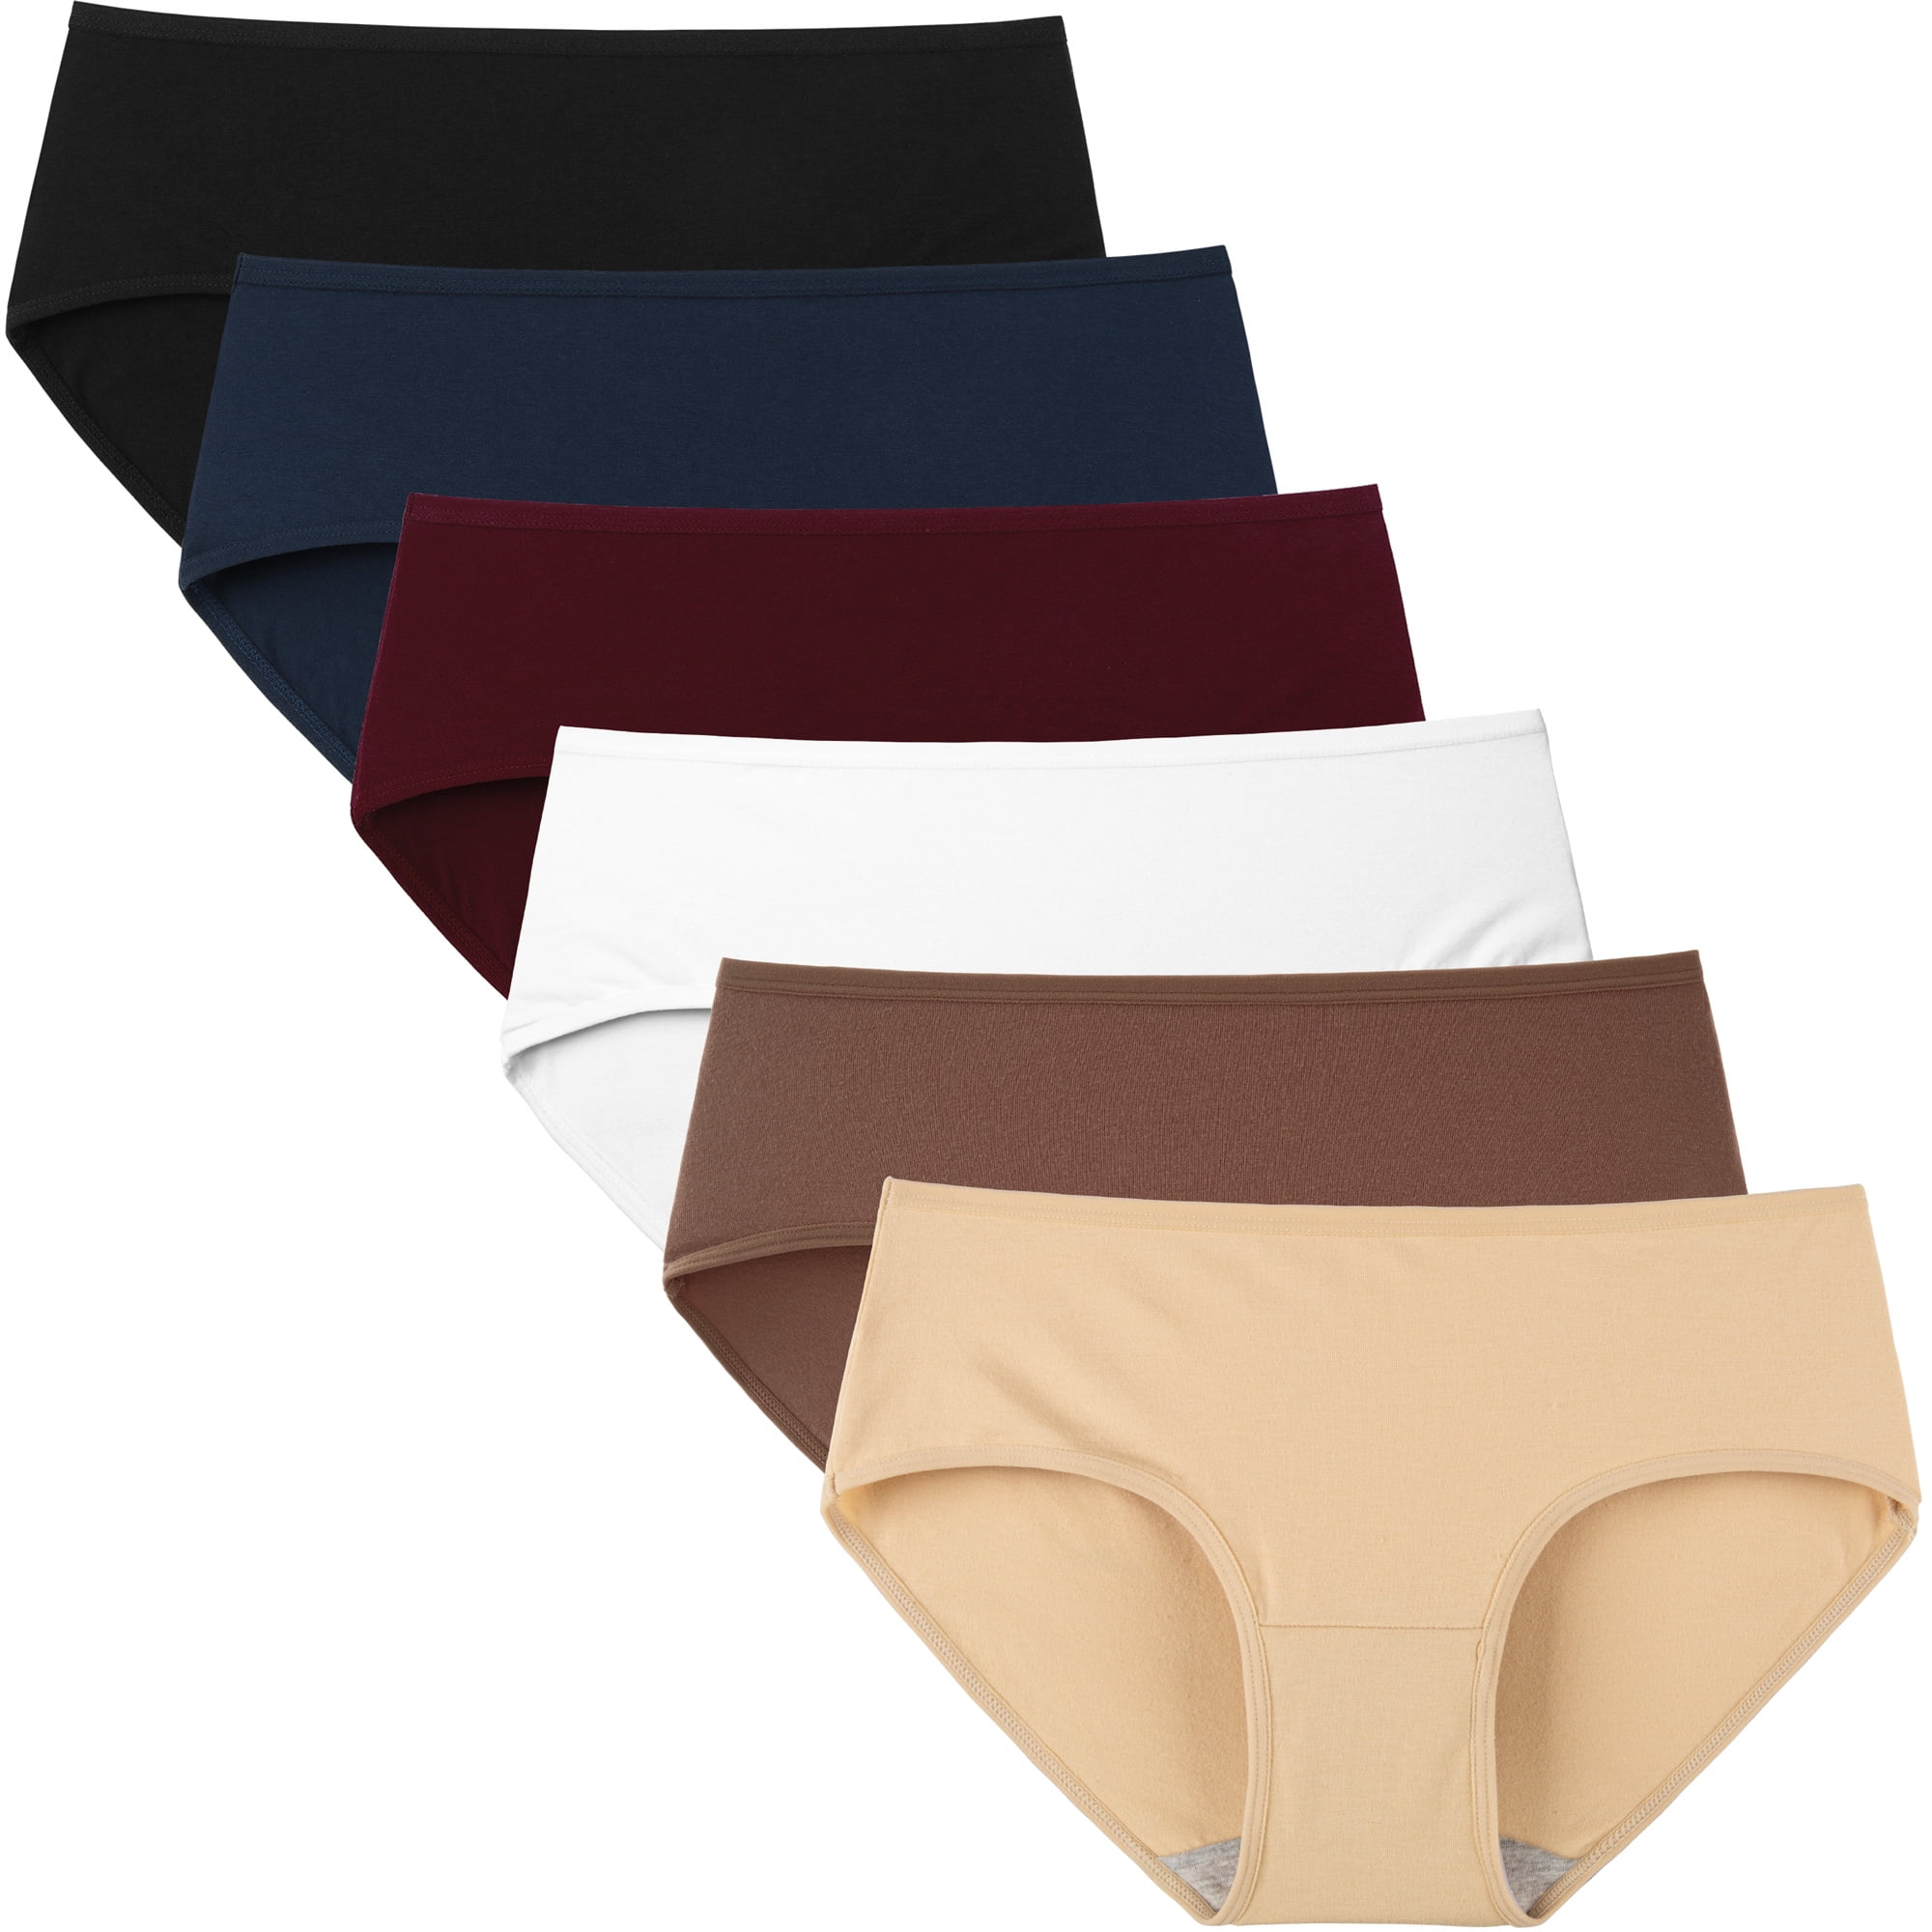 Seamless Postpartum Hipster Compression Panties 3-Pack Bundle